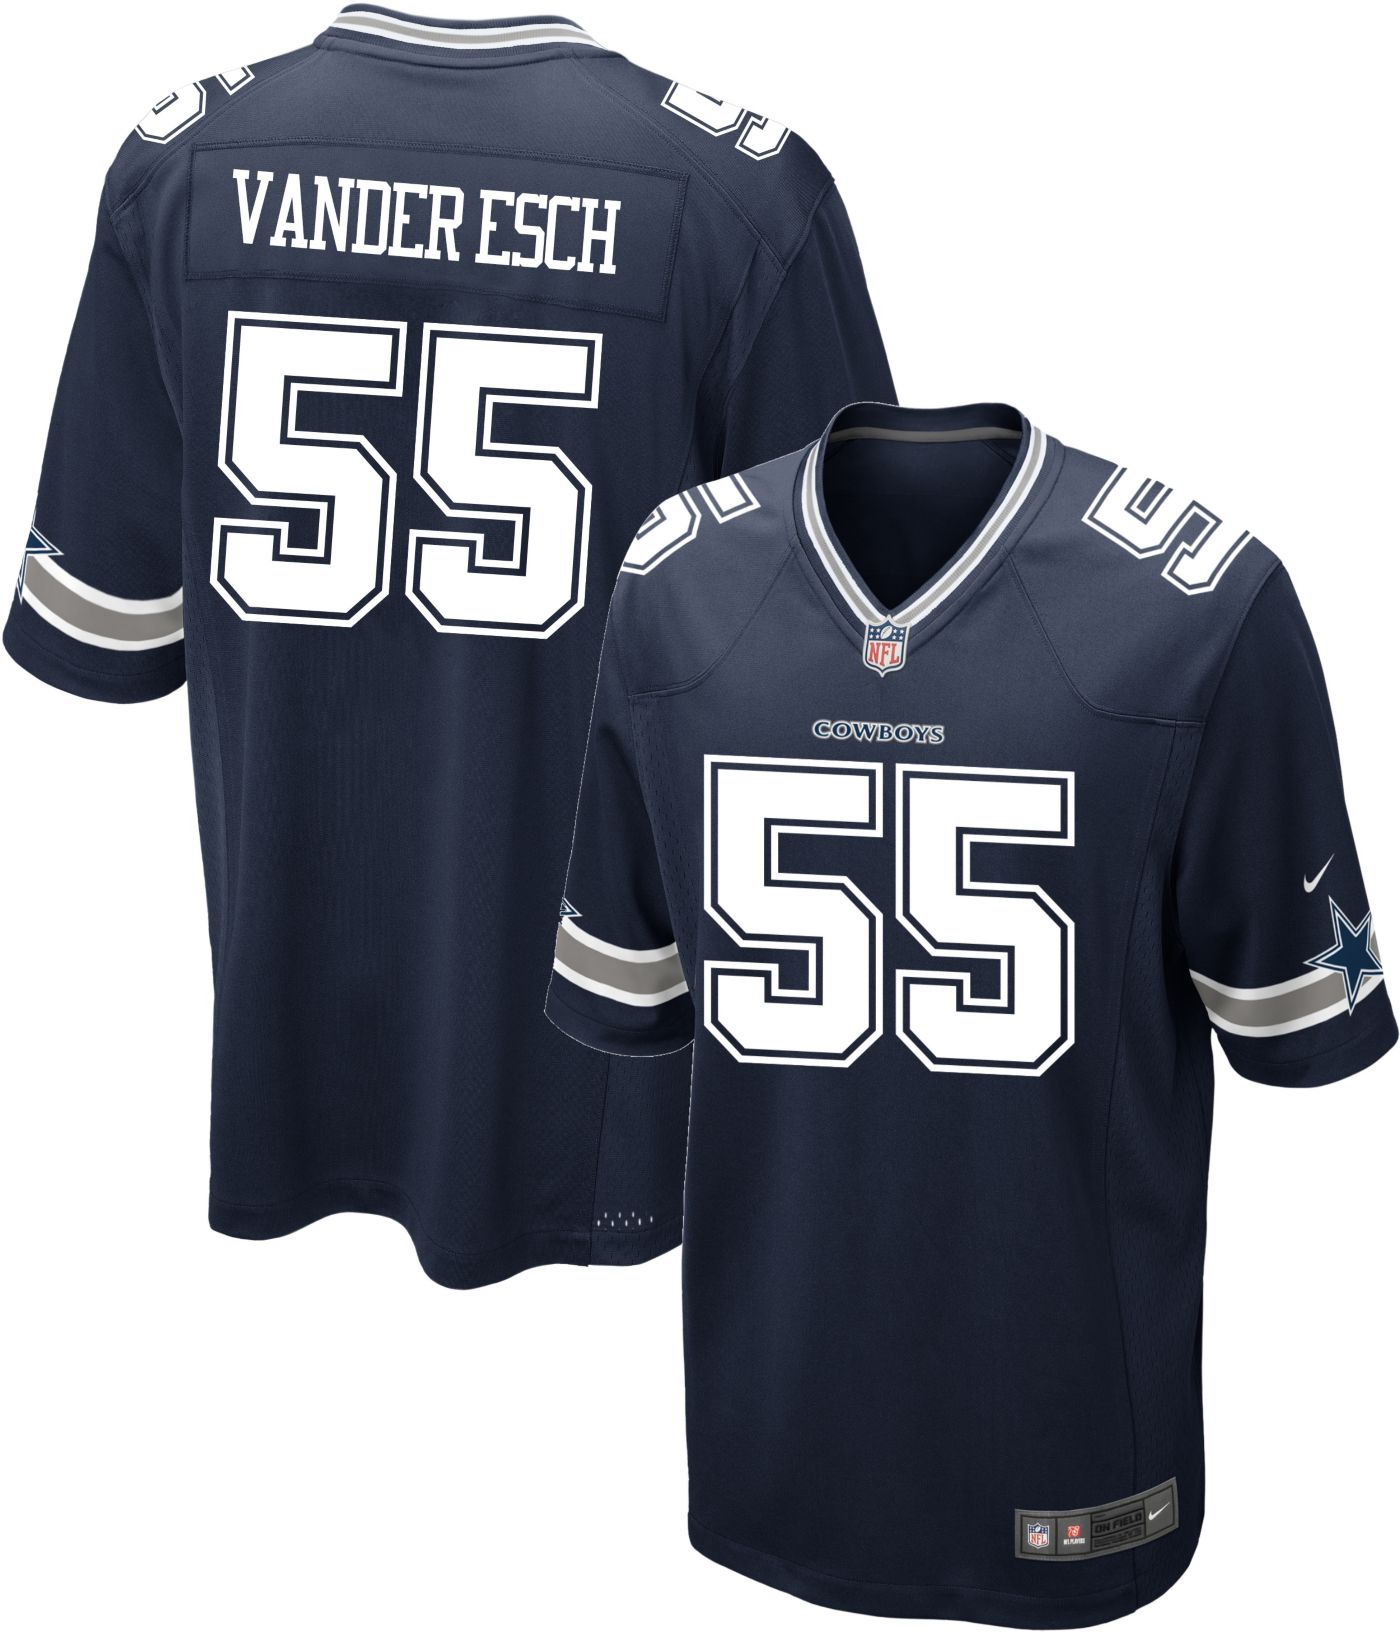 Leighton Vander Esch #55 Nike Men's Dallas Cowboys Game Jersey | DICK'S ...